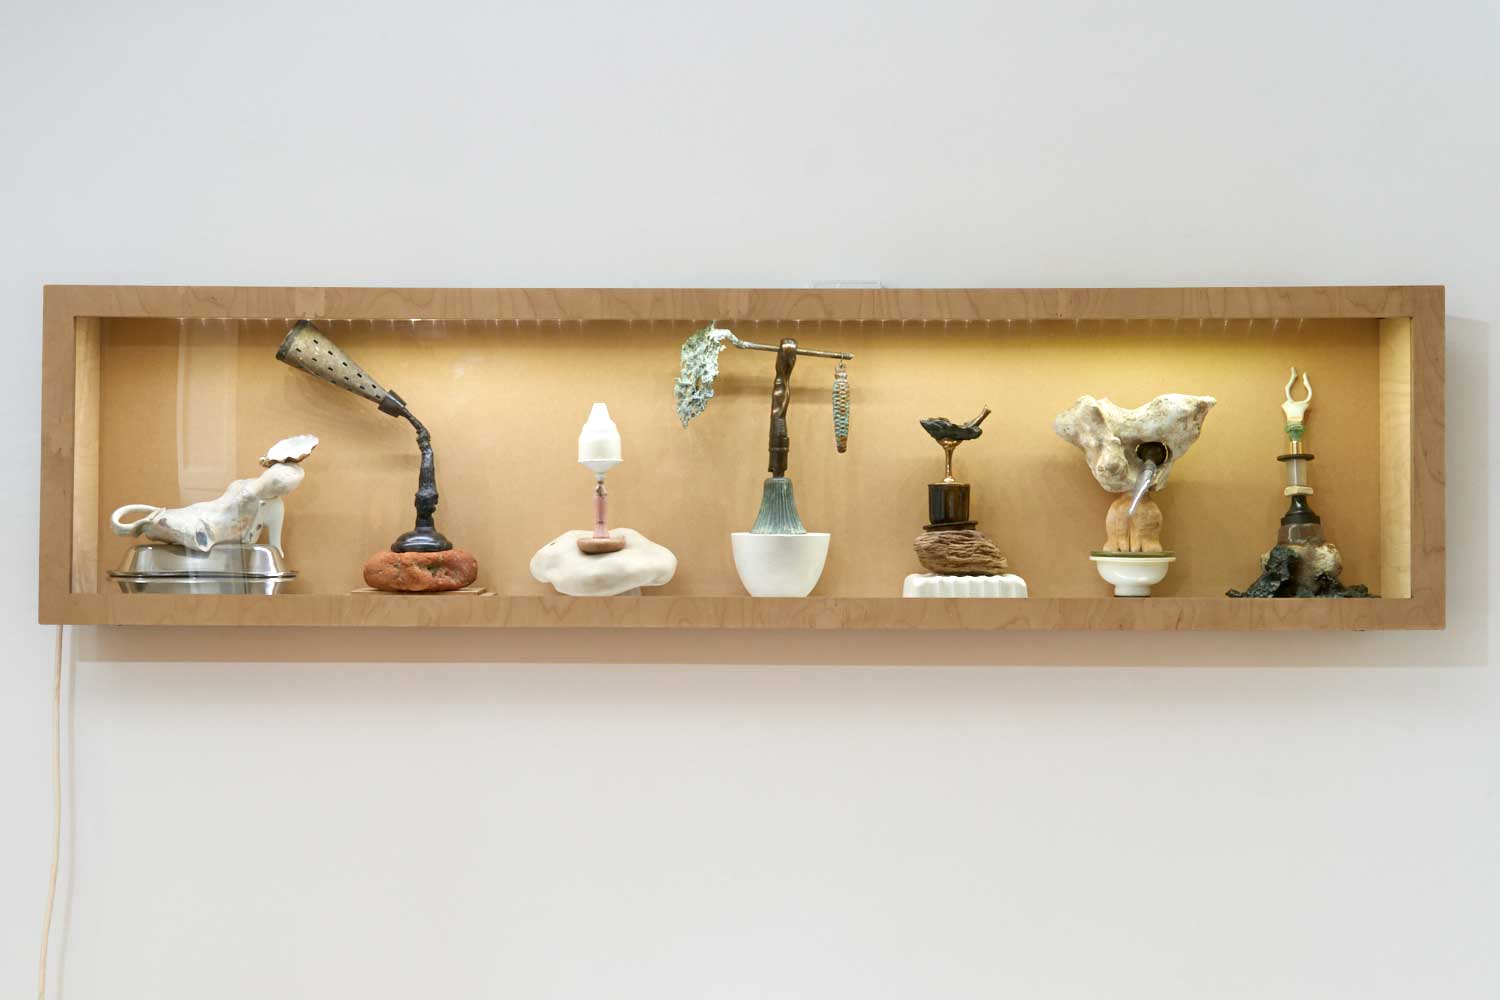 Andrea Gregson, Objectships, 2013